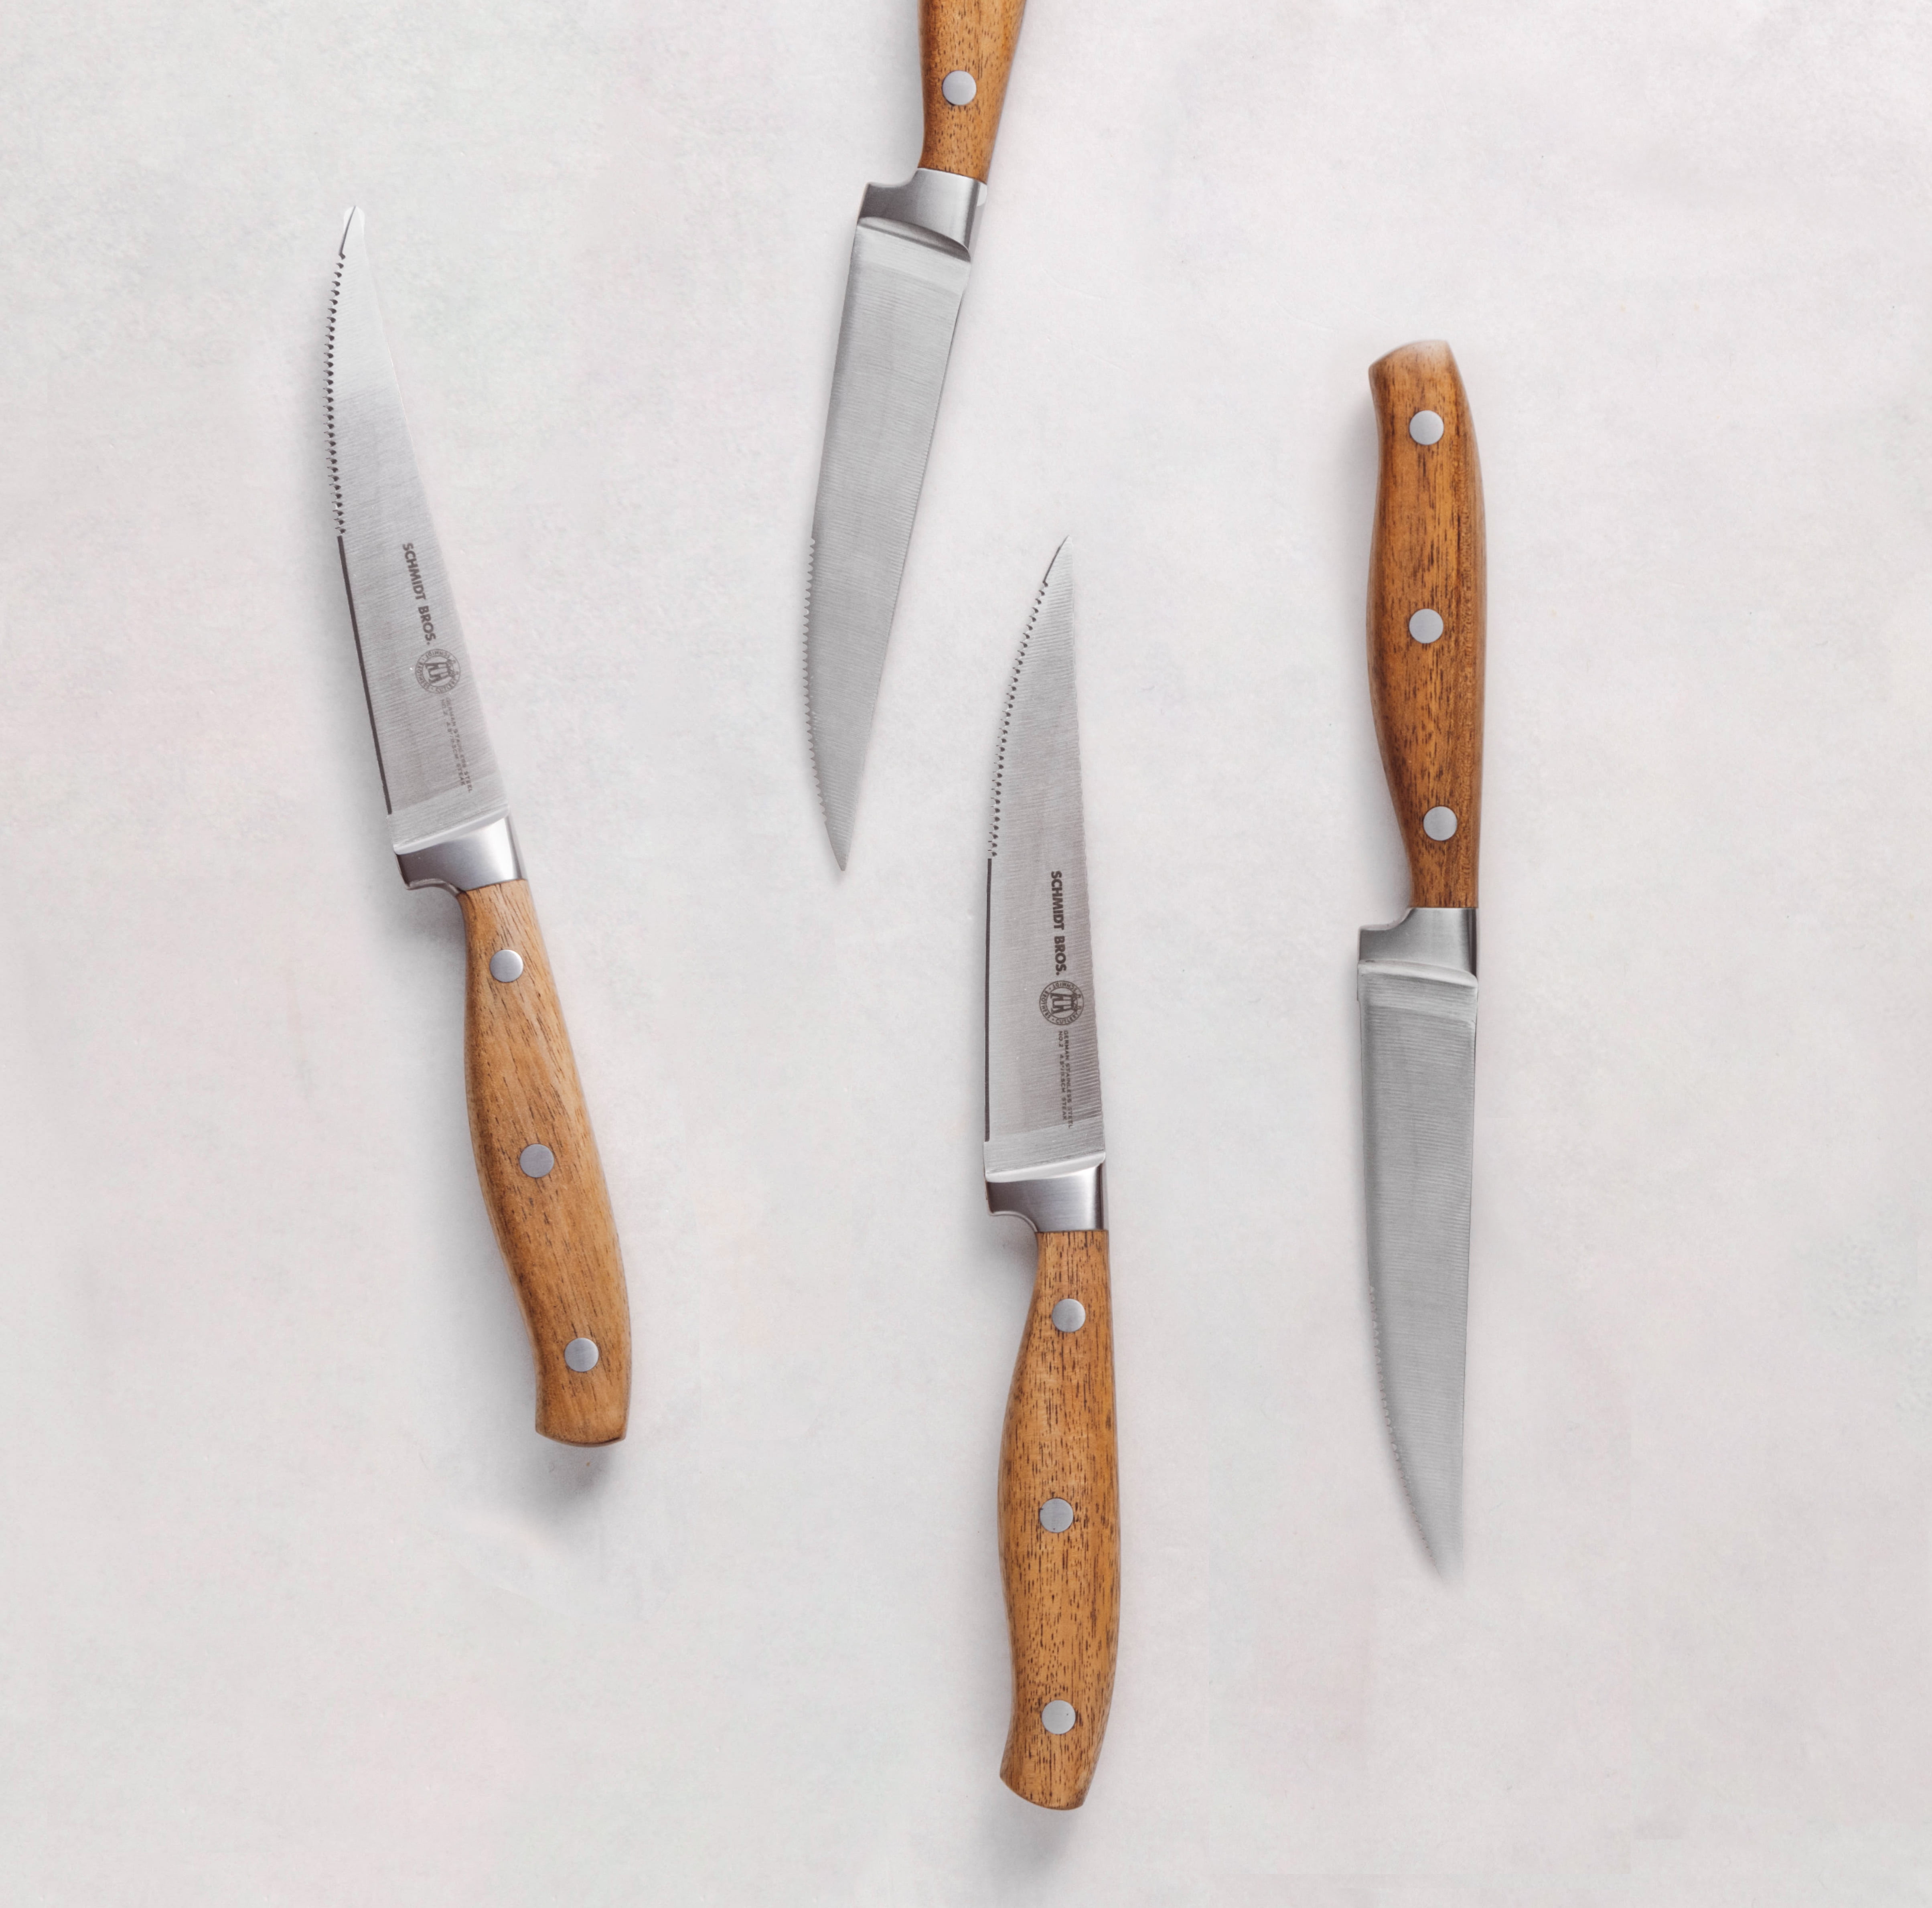 Schmidt Brothers Stainless Steel Jumbo Steak Knives, Set of 4 + Reviews